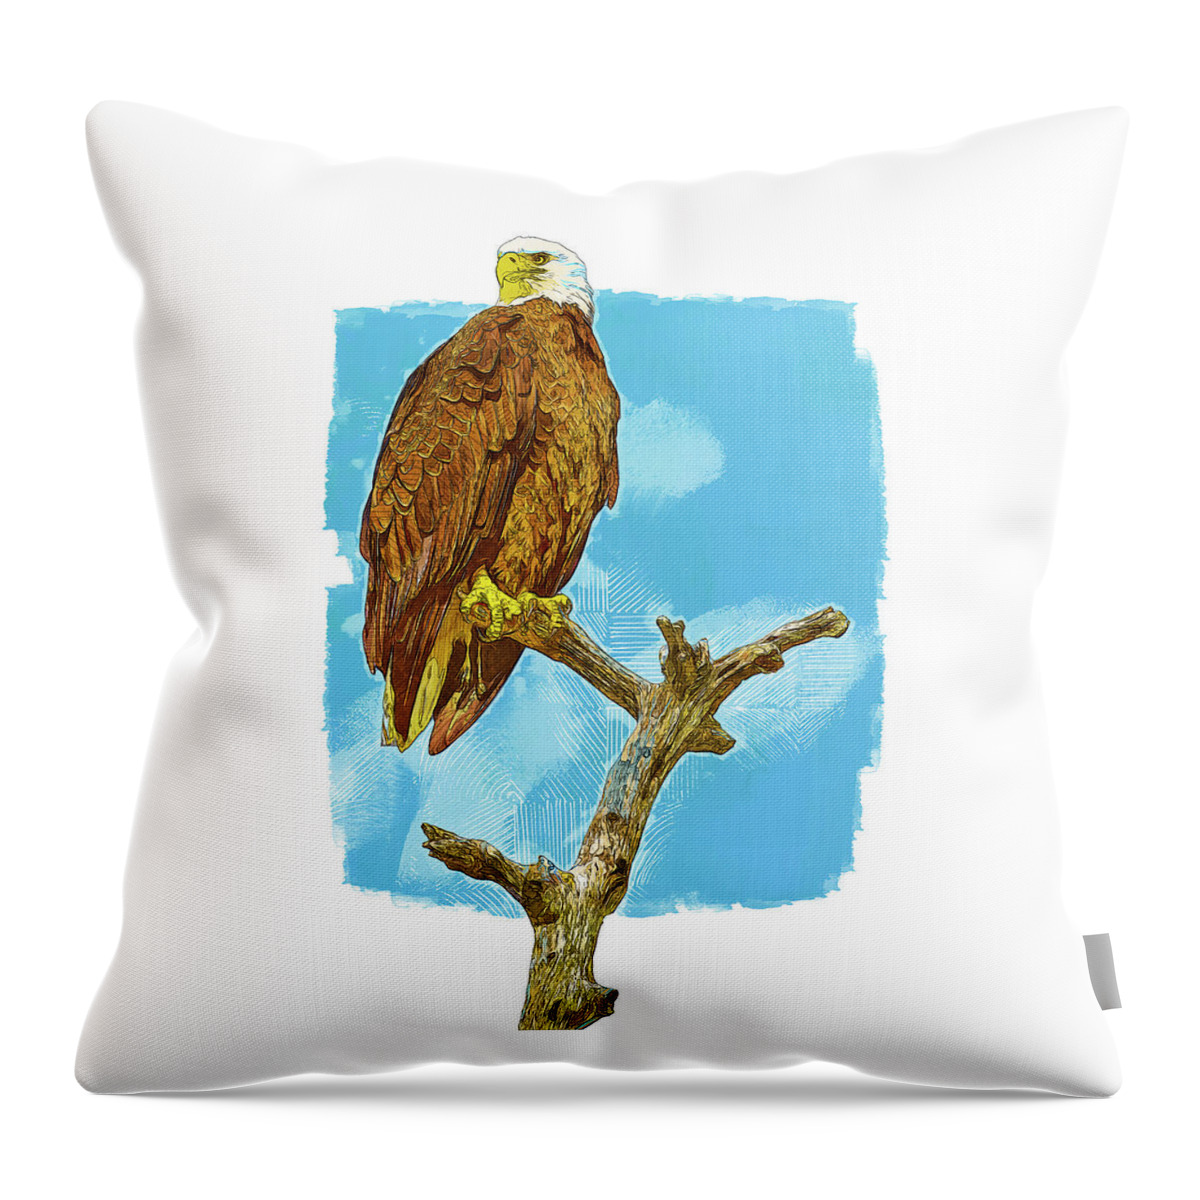 Myeress Throw Pillow featuring the photograph Bald Eagle painted effect by Joe Myeress